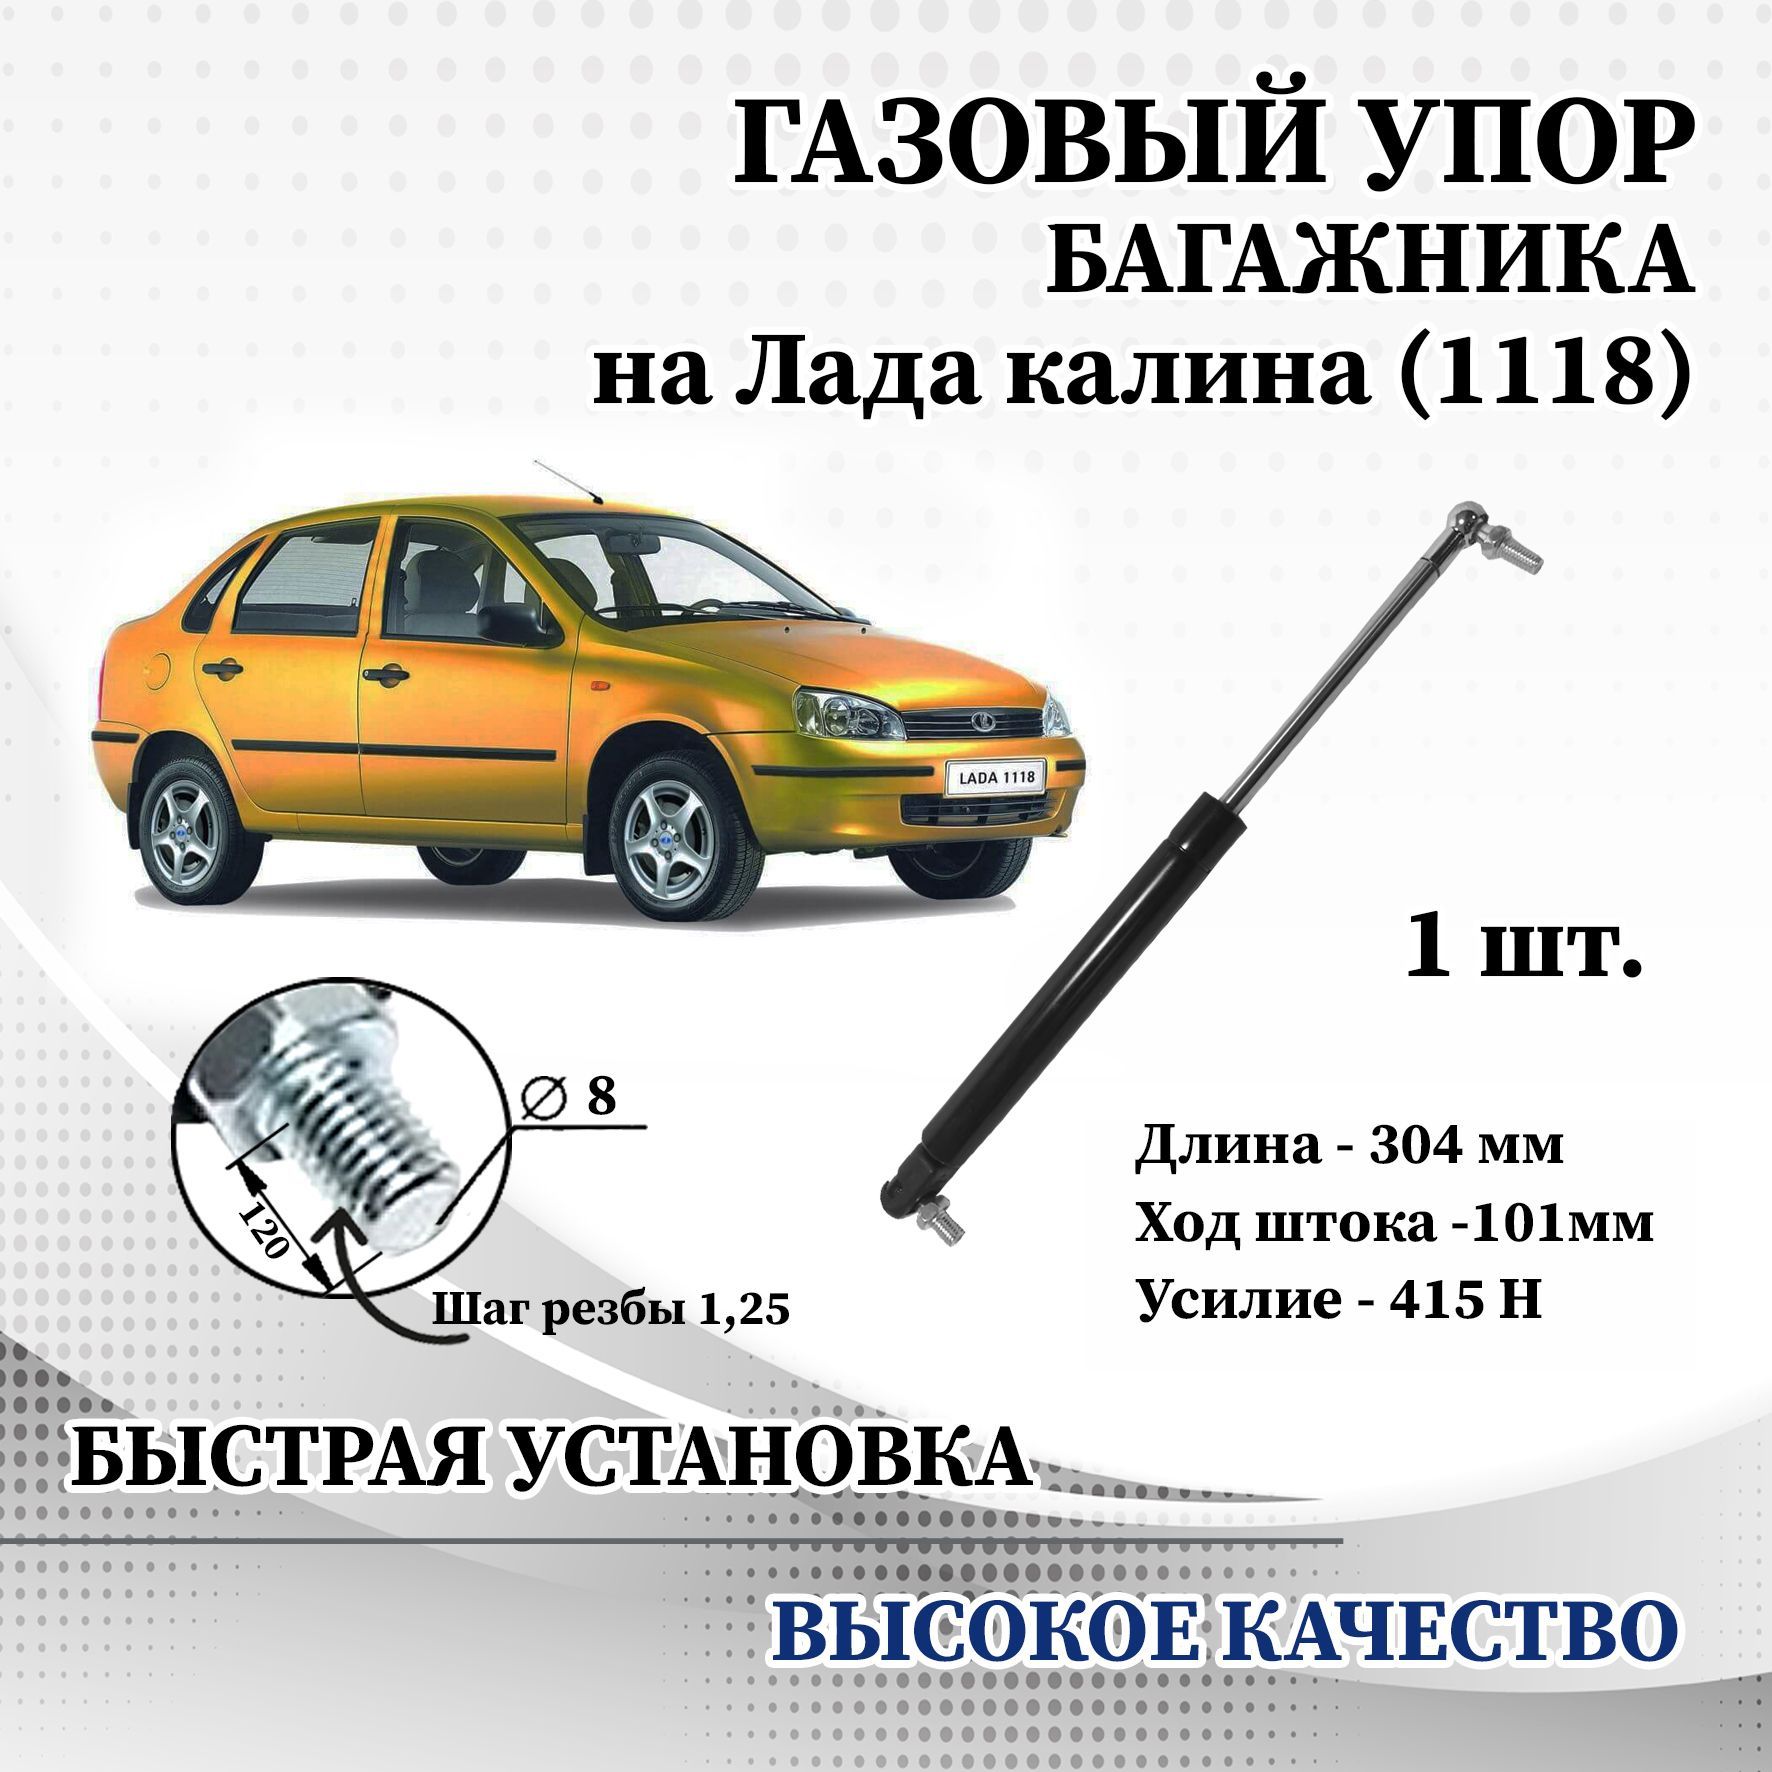 OFF: Что лучше - Lada Kalina 2 VS Hyundai Solaris?